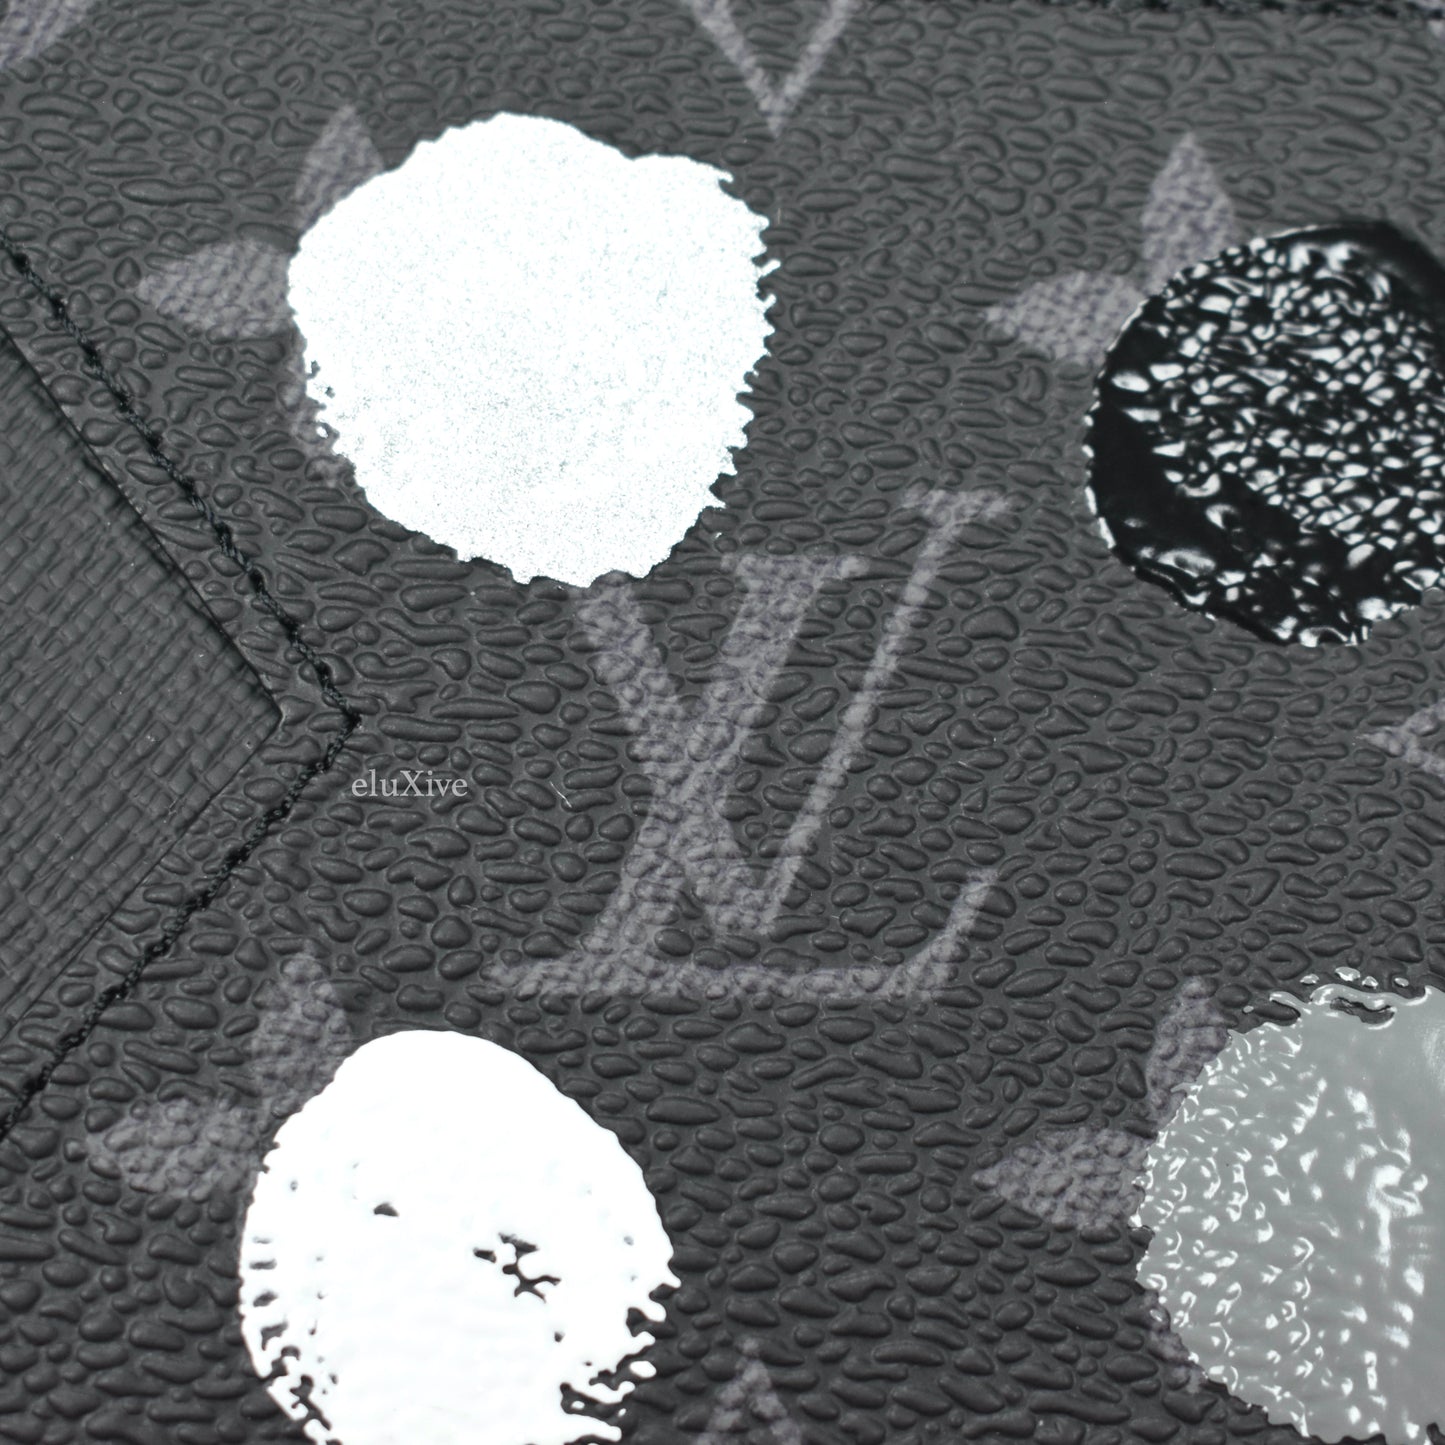 Louis Vuitton x Yayoi Kusama - Polka Dot Paint Monogram Zip Card Holder